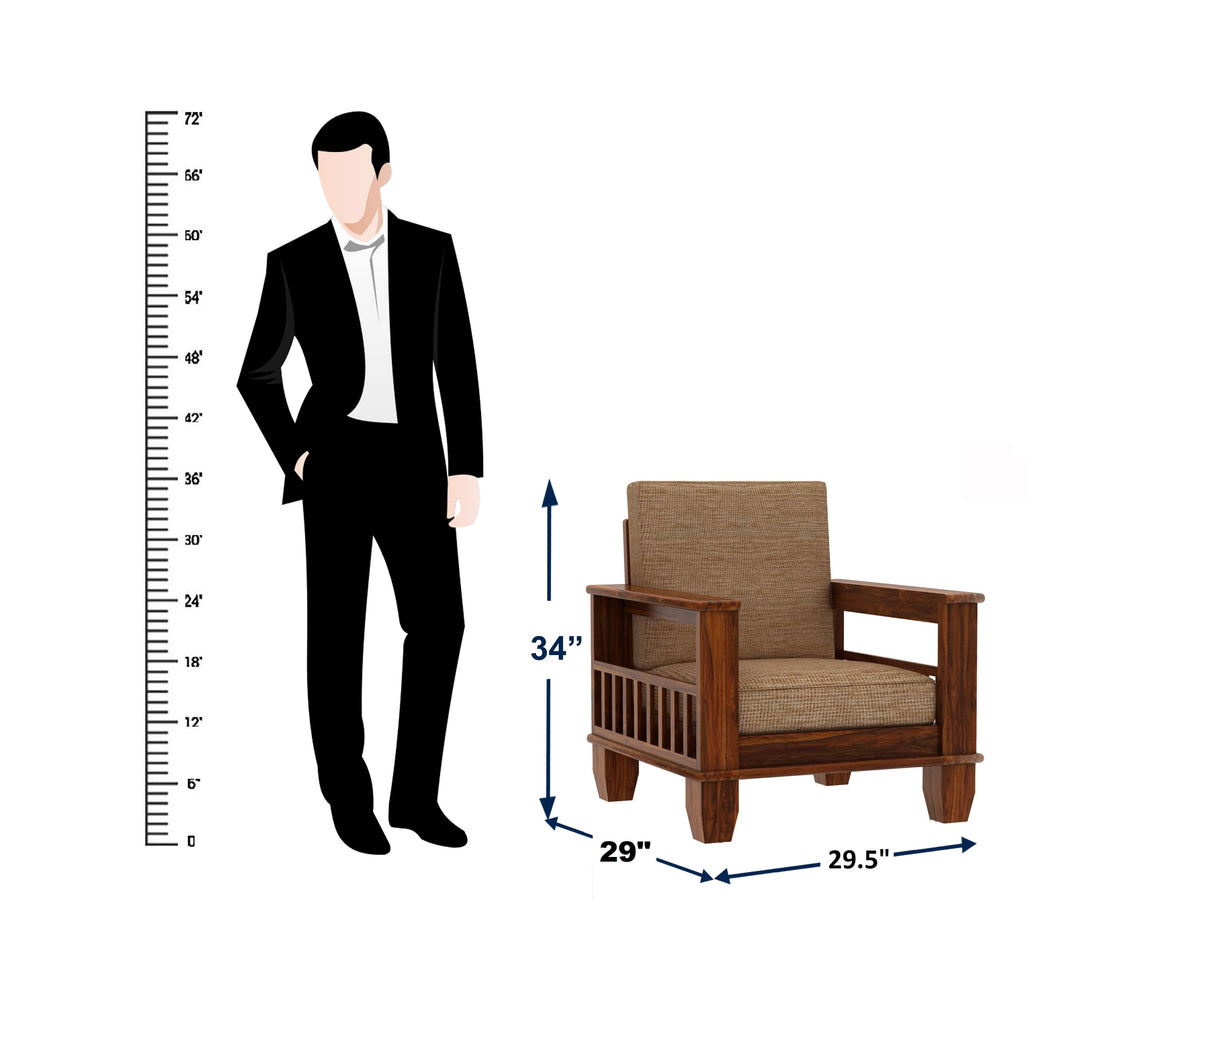 Maharaja Solid Sheesham Wood Single Seater Sofa - 1 Year Warranty